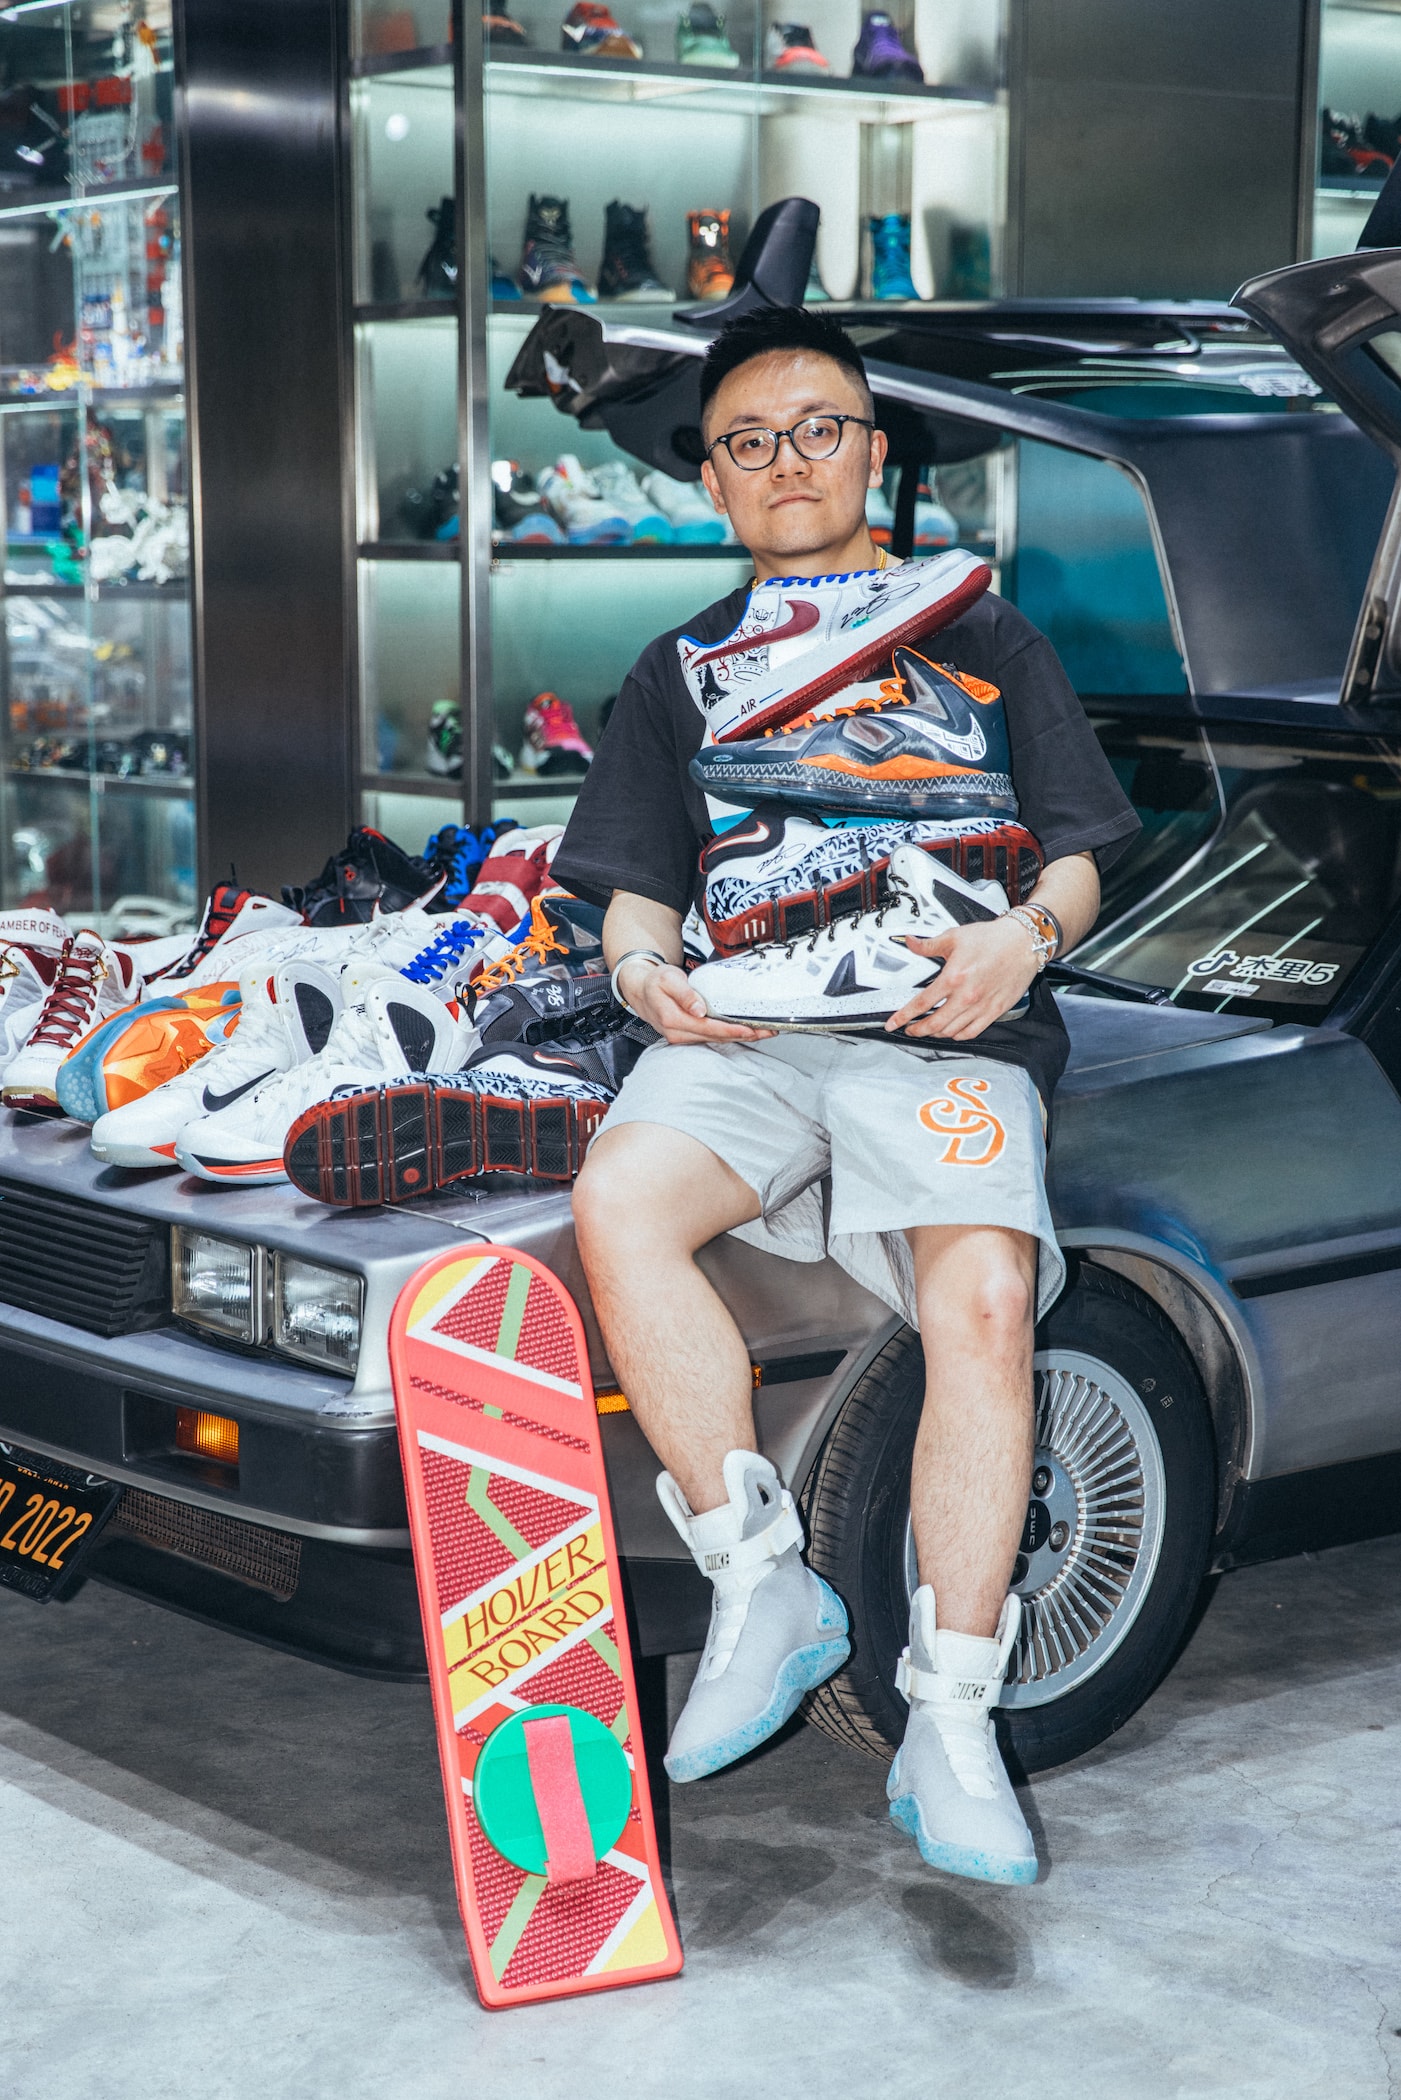 SneakerCon 合伙人 Jerry 分享 LeBron 落场版亲签收藏及 DMC 跑车故事 | Sole Mates